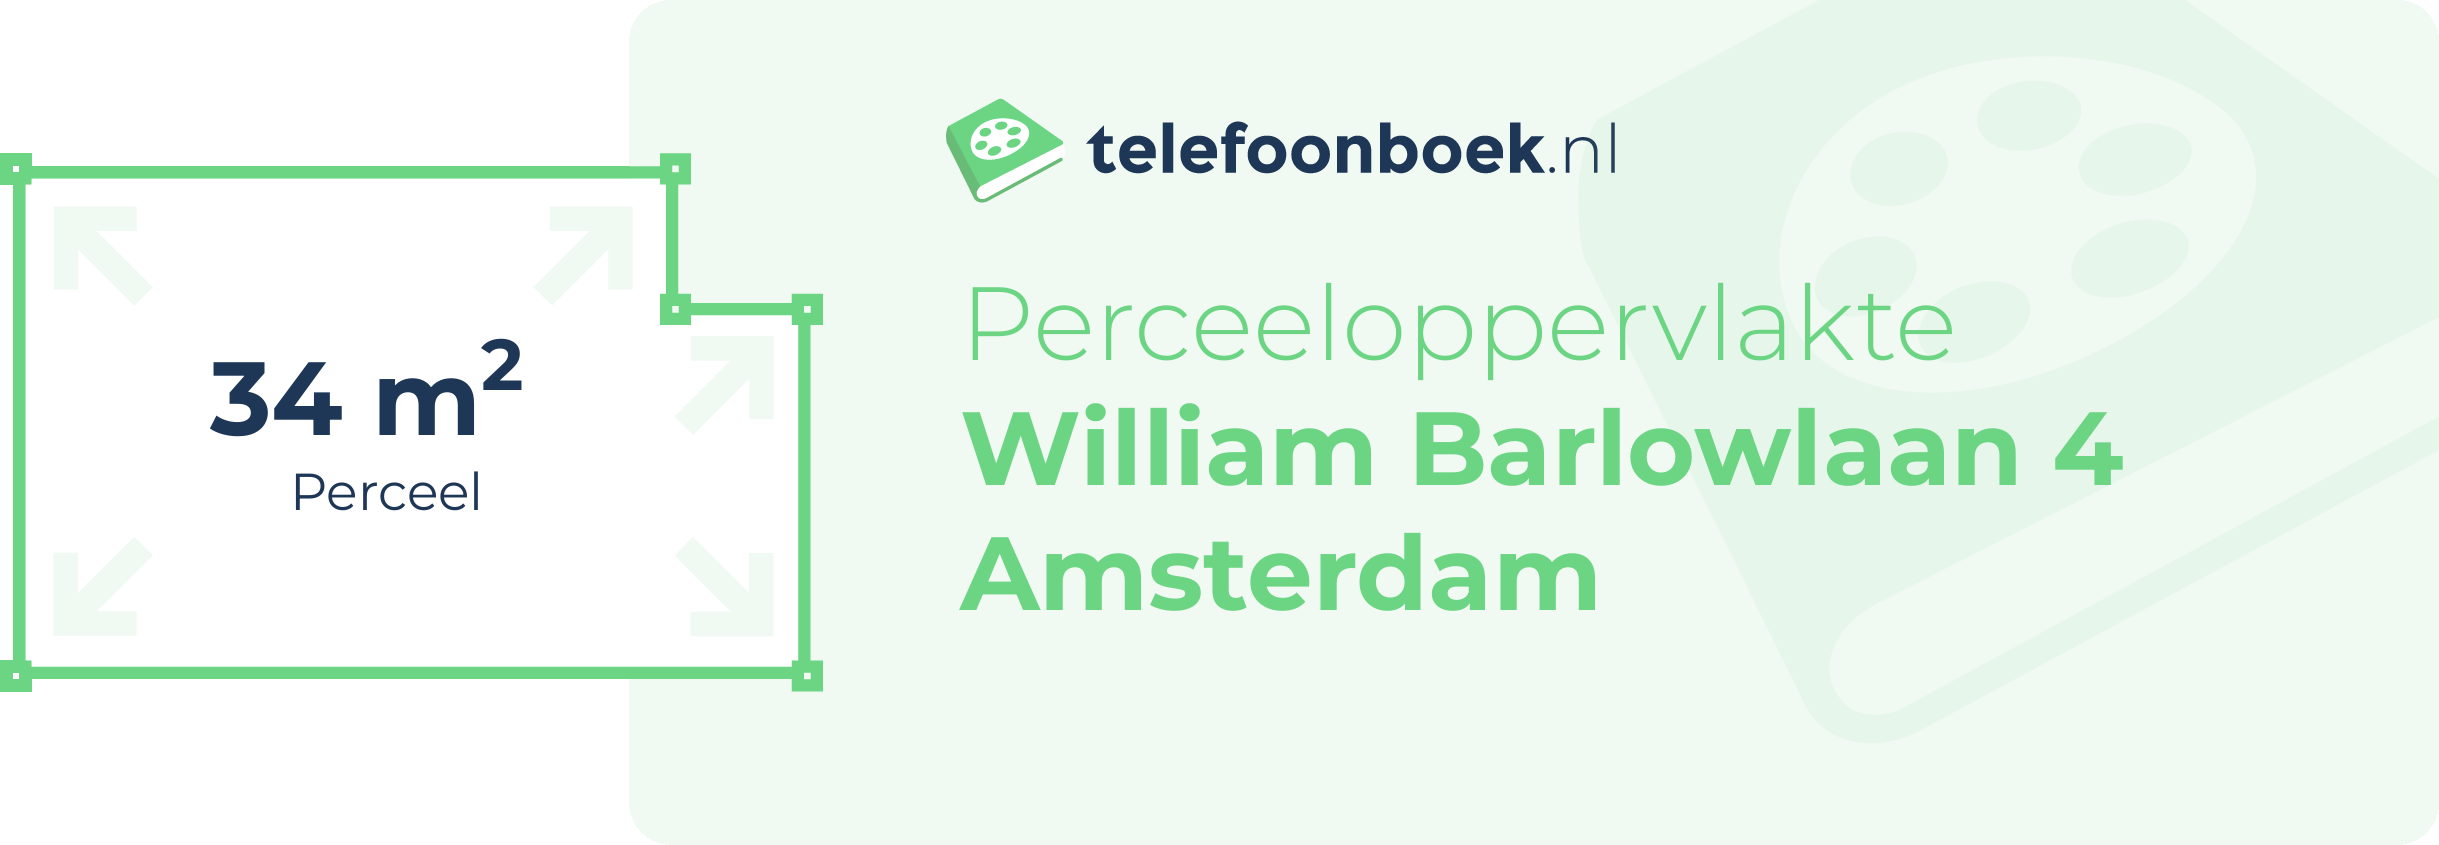 Perceeloppervlakte William Barlowlaan 4 Amsterdam